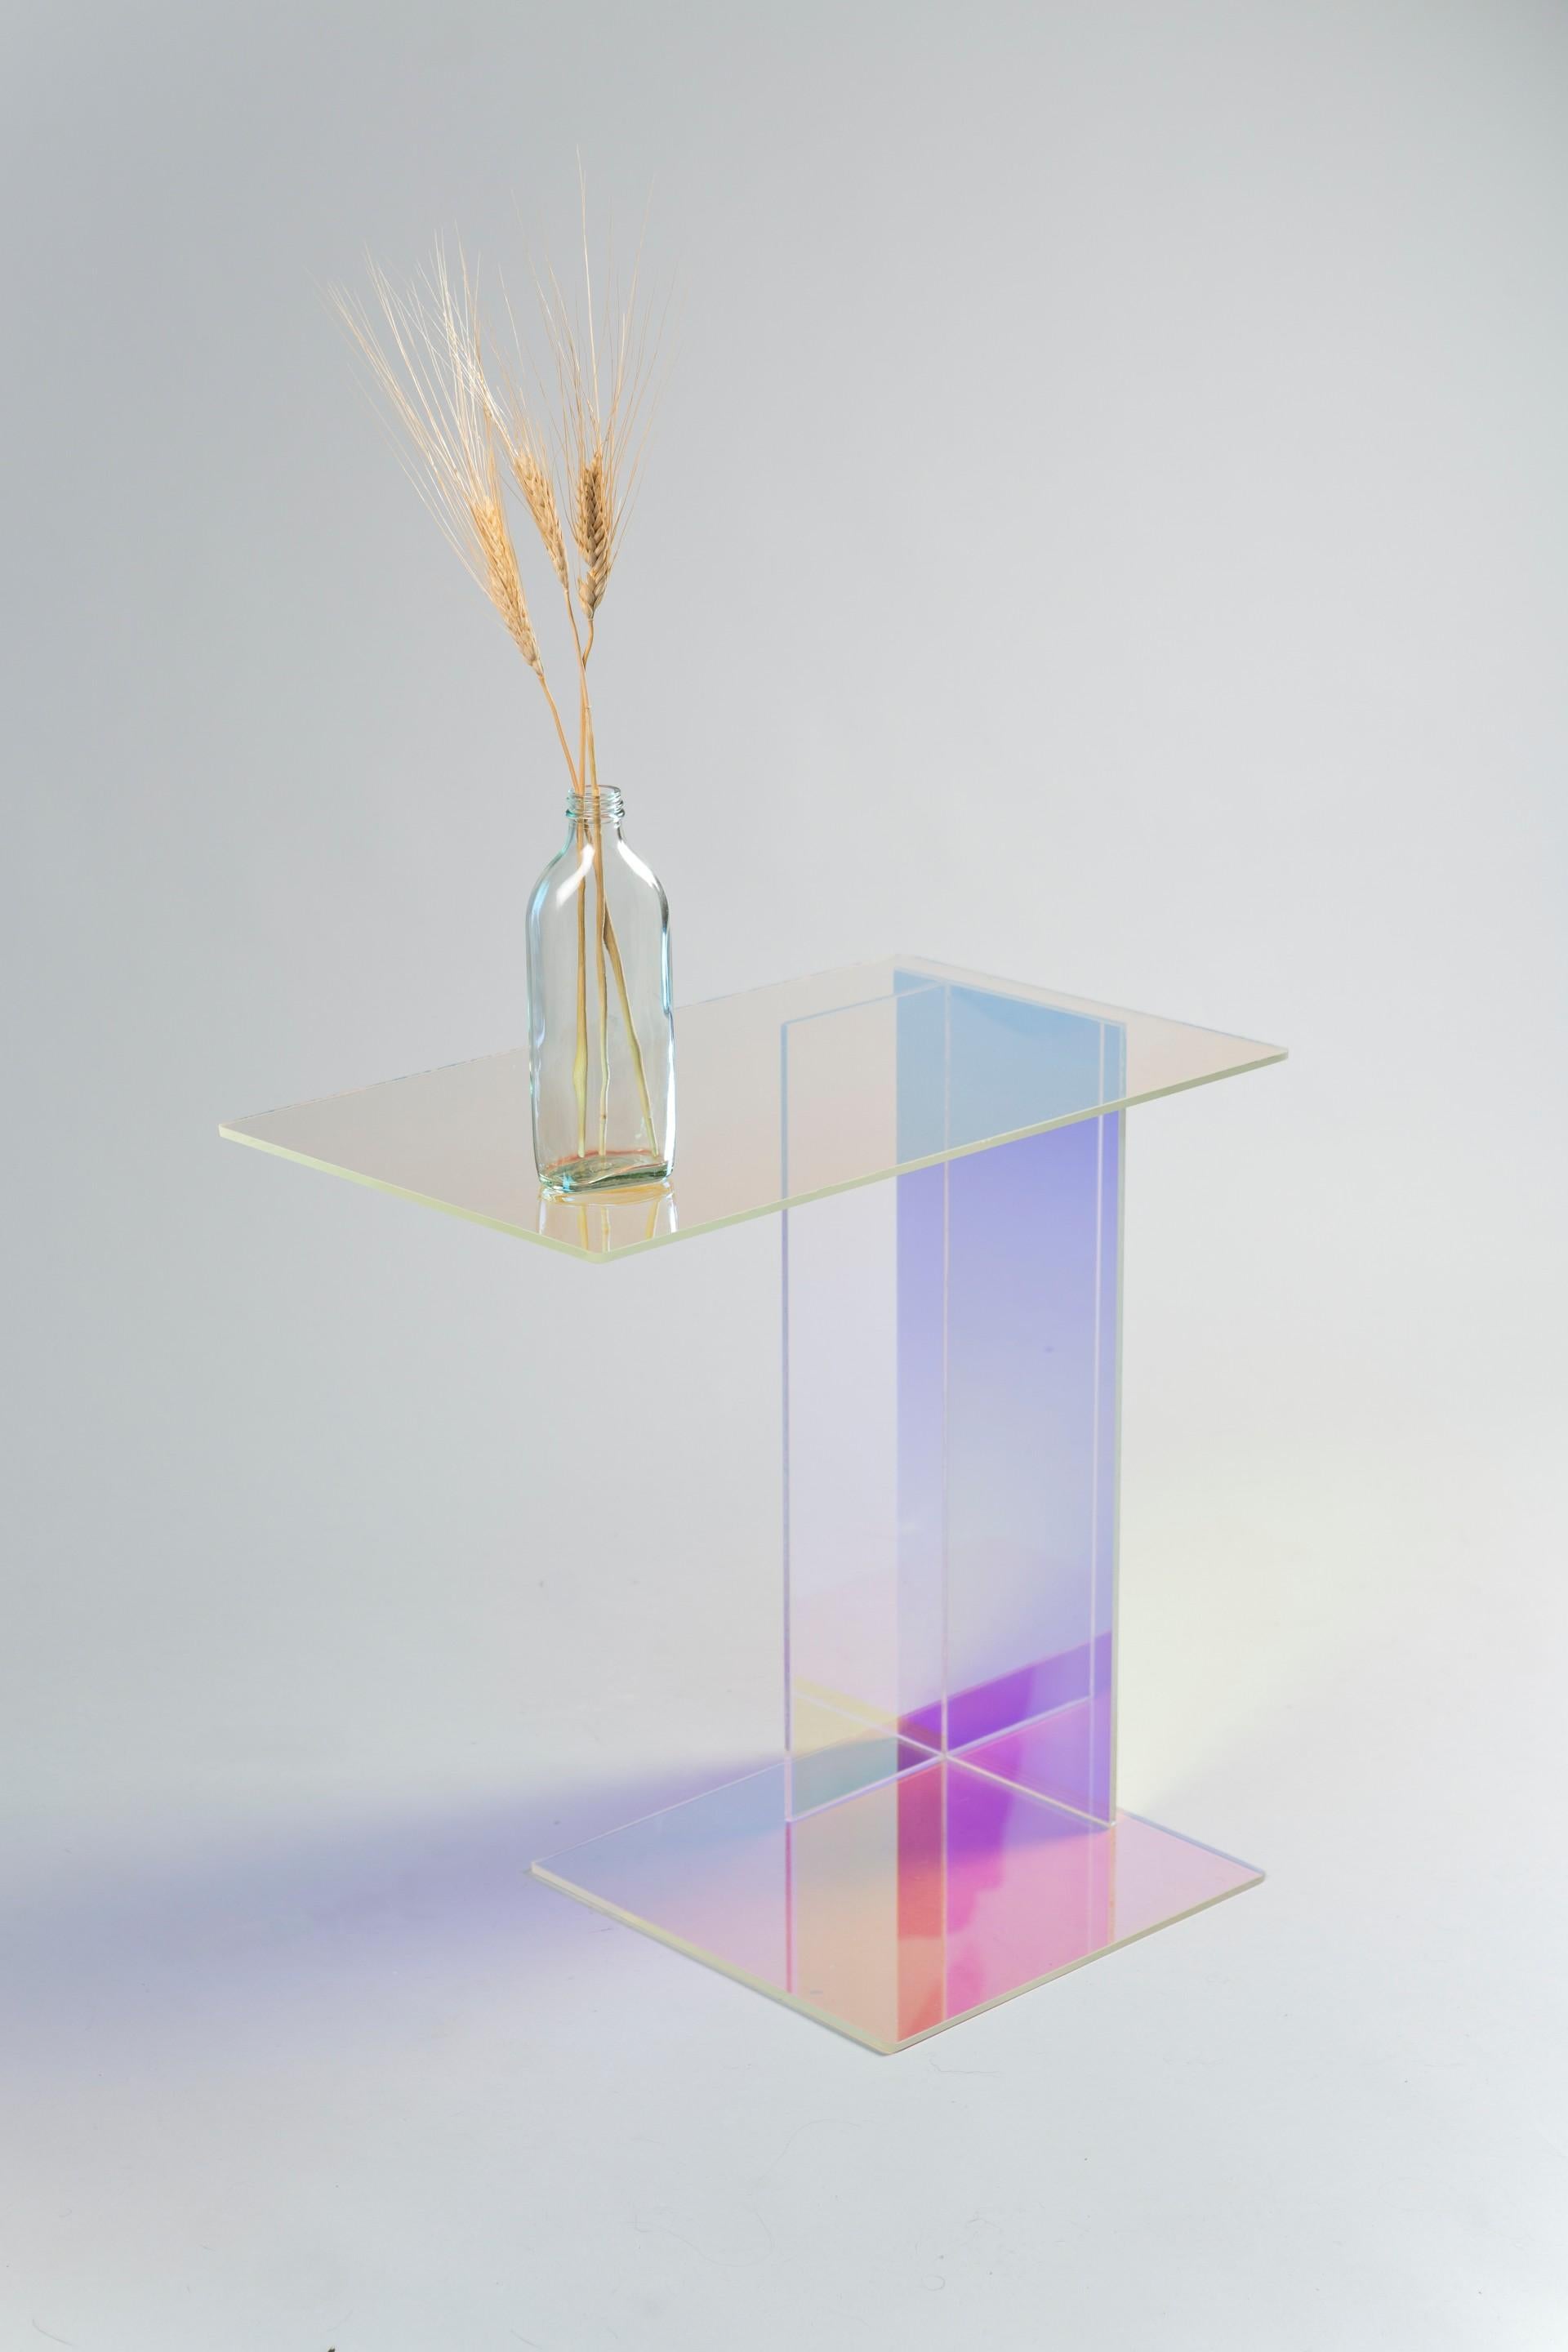 Dichroic side table - Rona Koblenz
Measures: 49 x 50 x 30 cm

